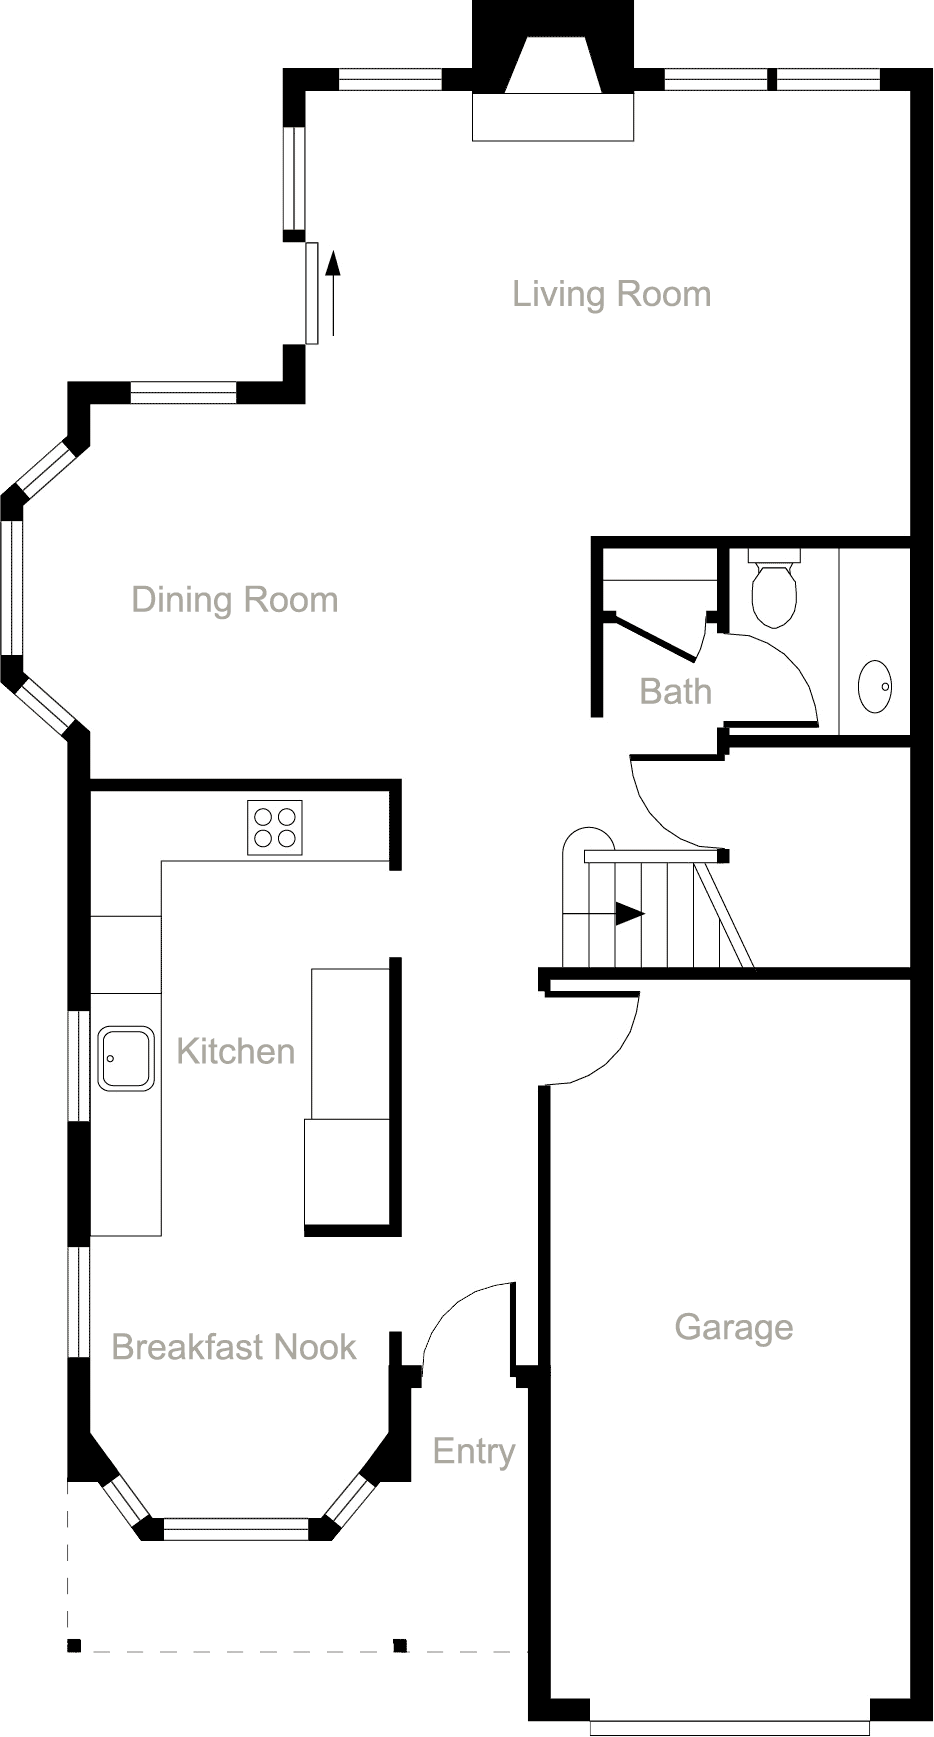 1st Floor Plan - The Royal Ascot